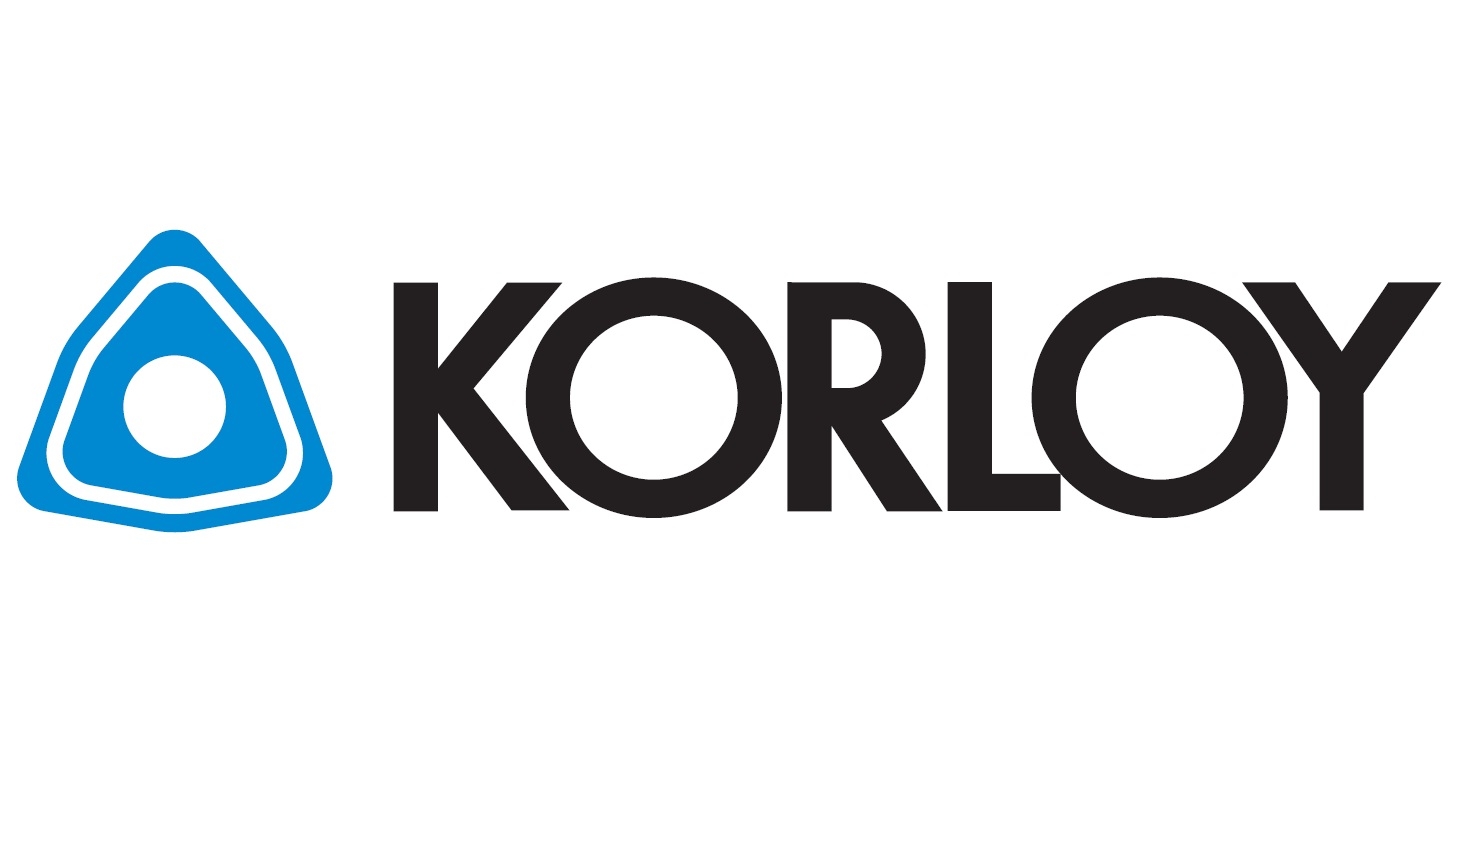 Korloy Logo photo - 1